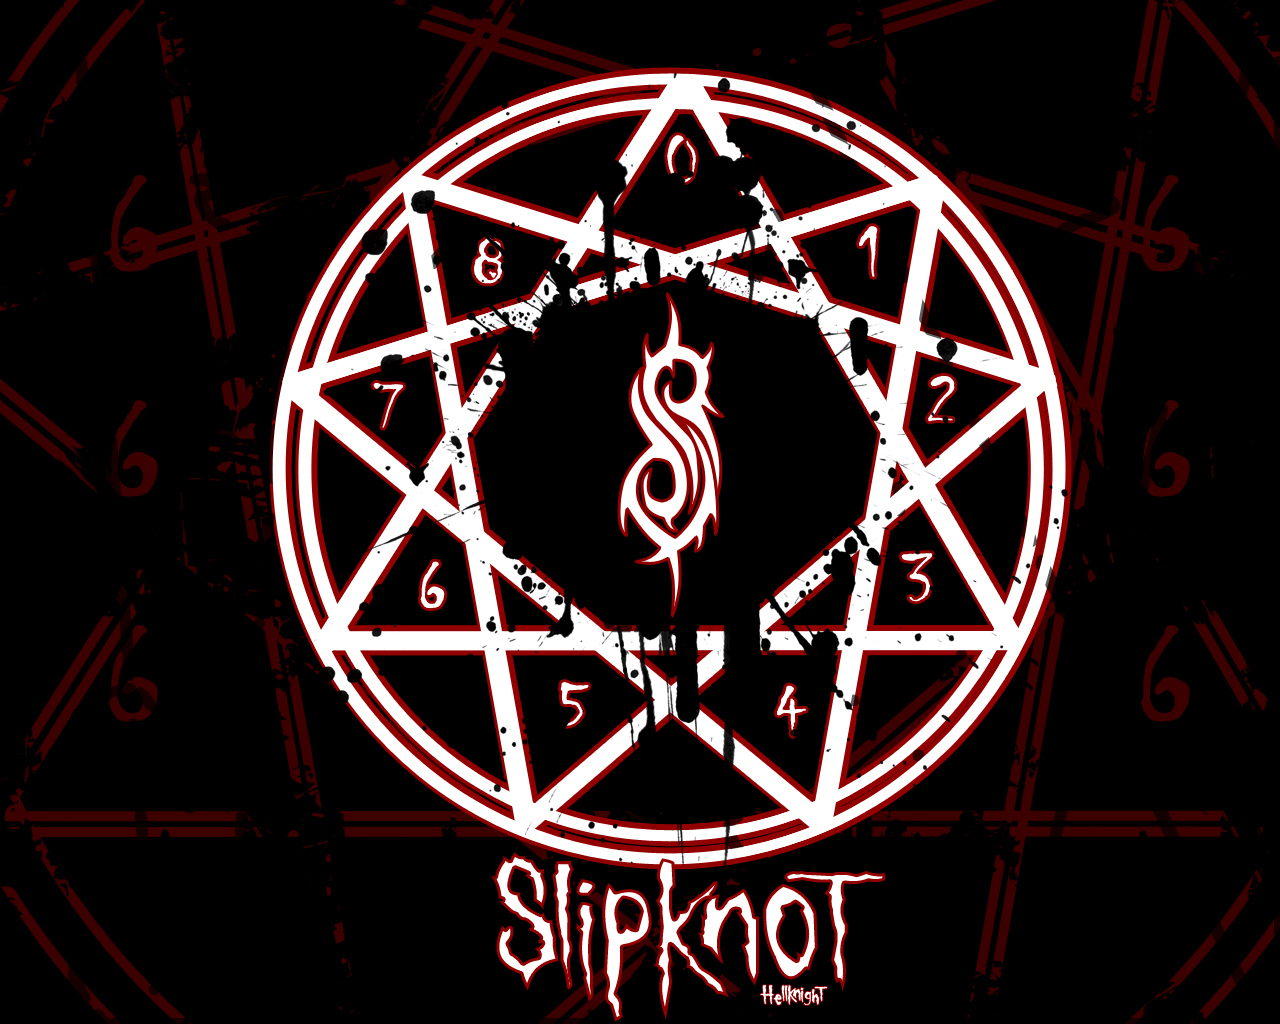 Metal Gods images Slipknots logo HD wallpaper and background photos 1280x1024